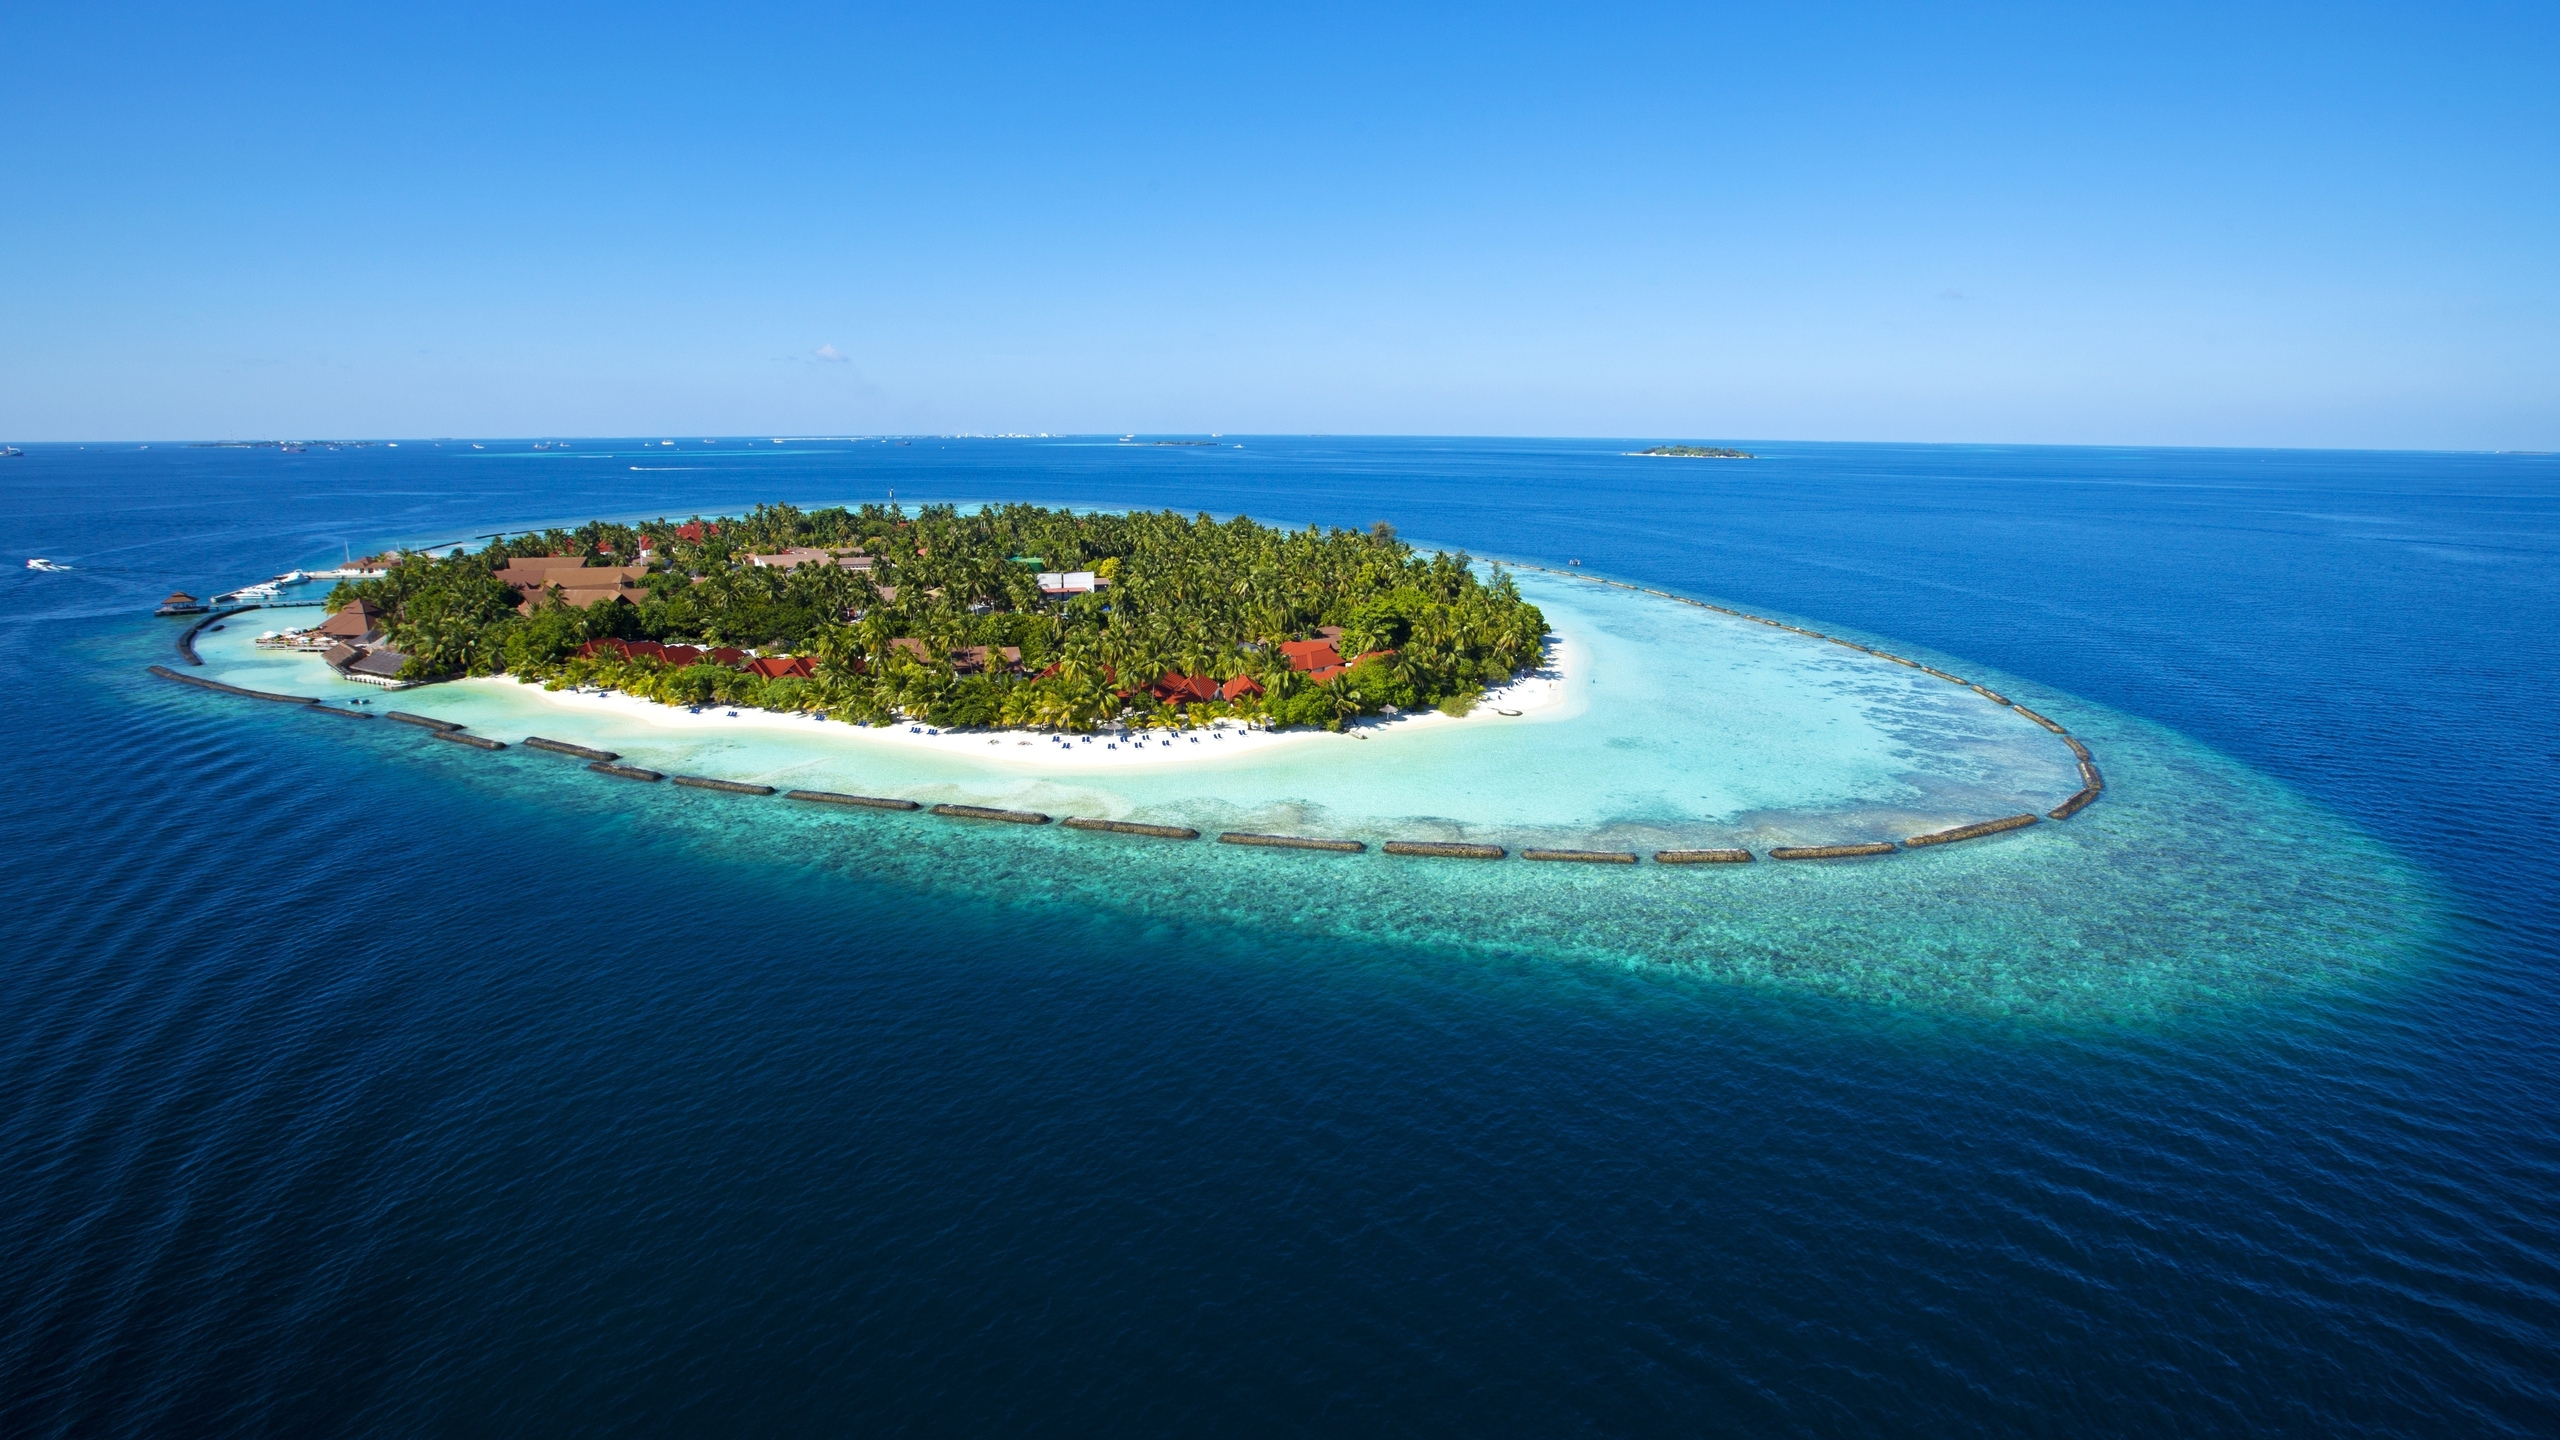 Amazing Maldives Island View for 2560x1440 HDTV resolution